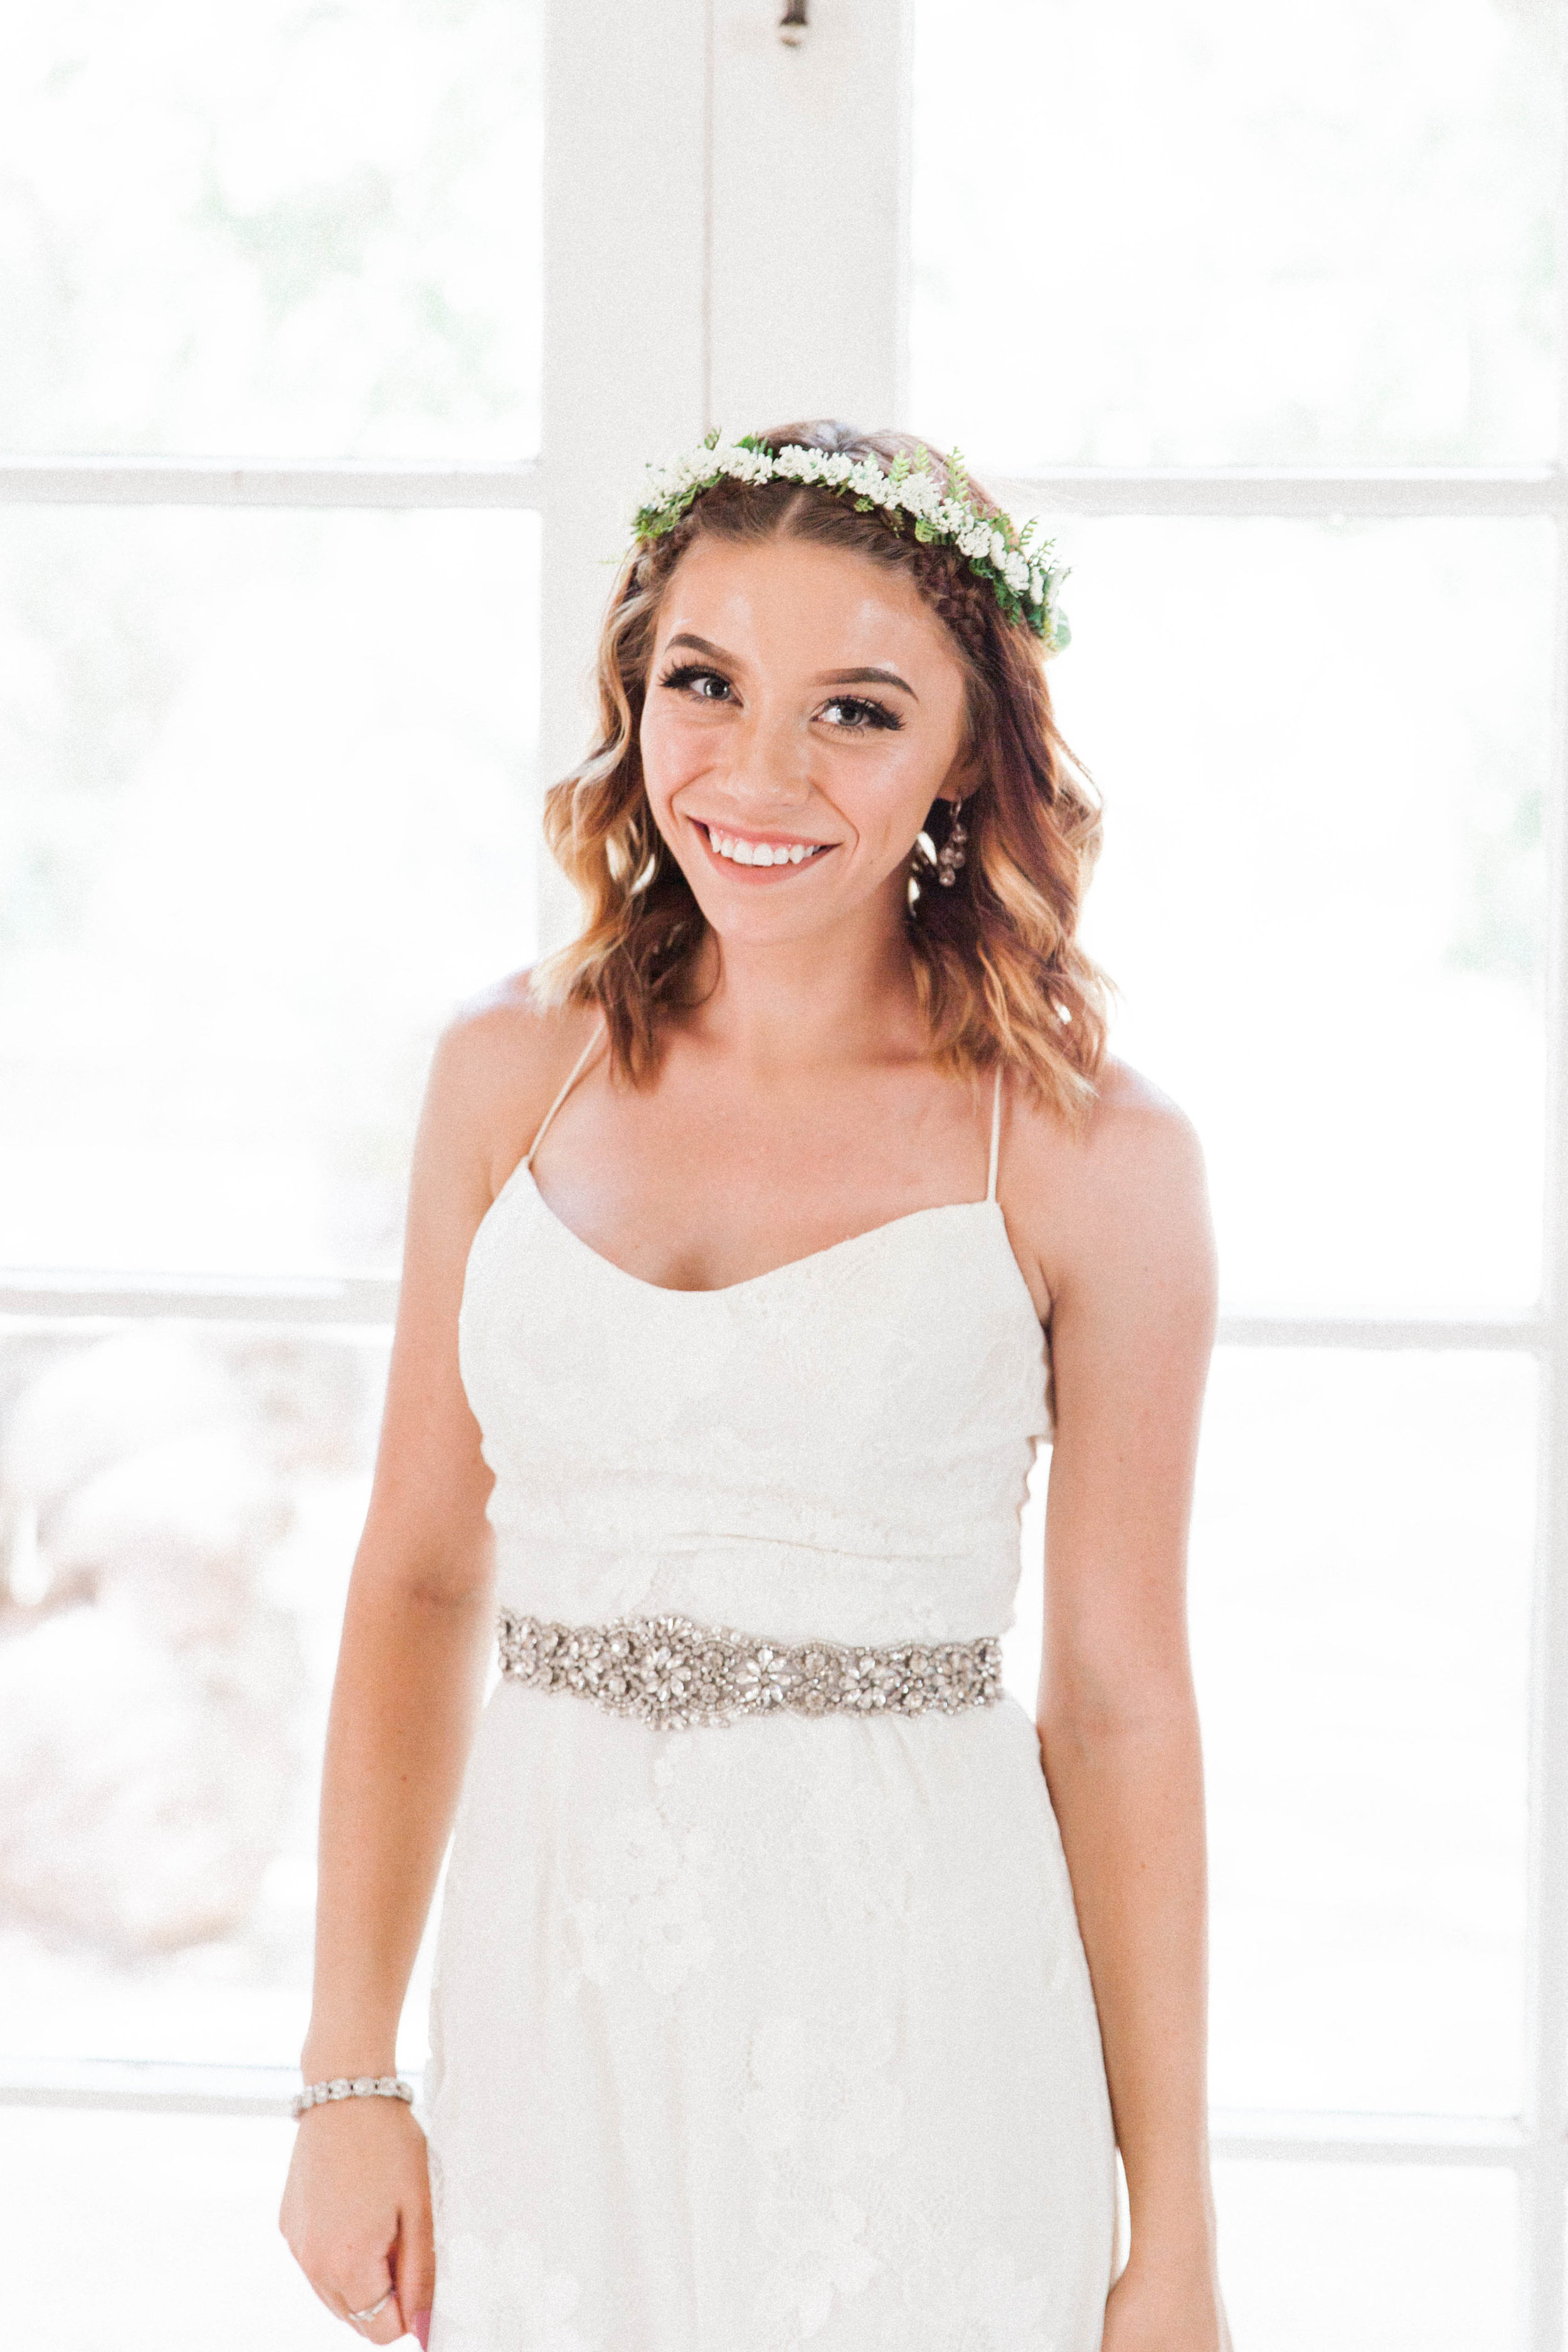 A Simple, DIY Arizona Wedding - Shaleena Danielle Photography -- Wedding Blog - The Overwhelmed Bride